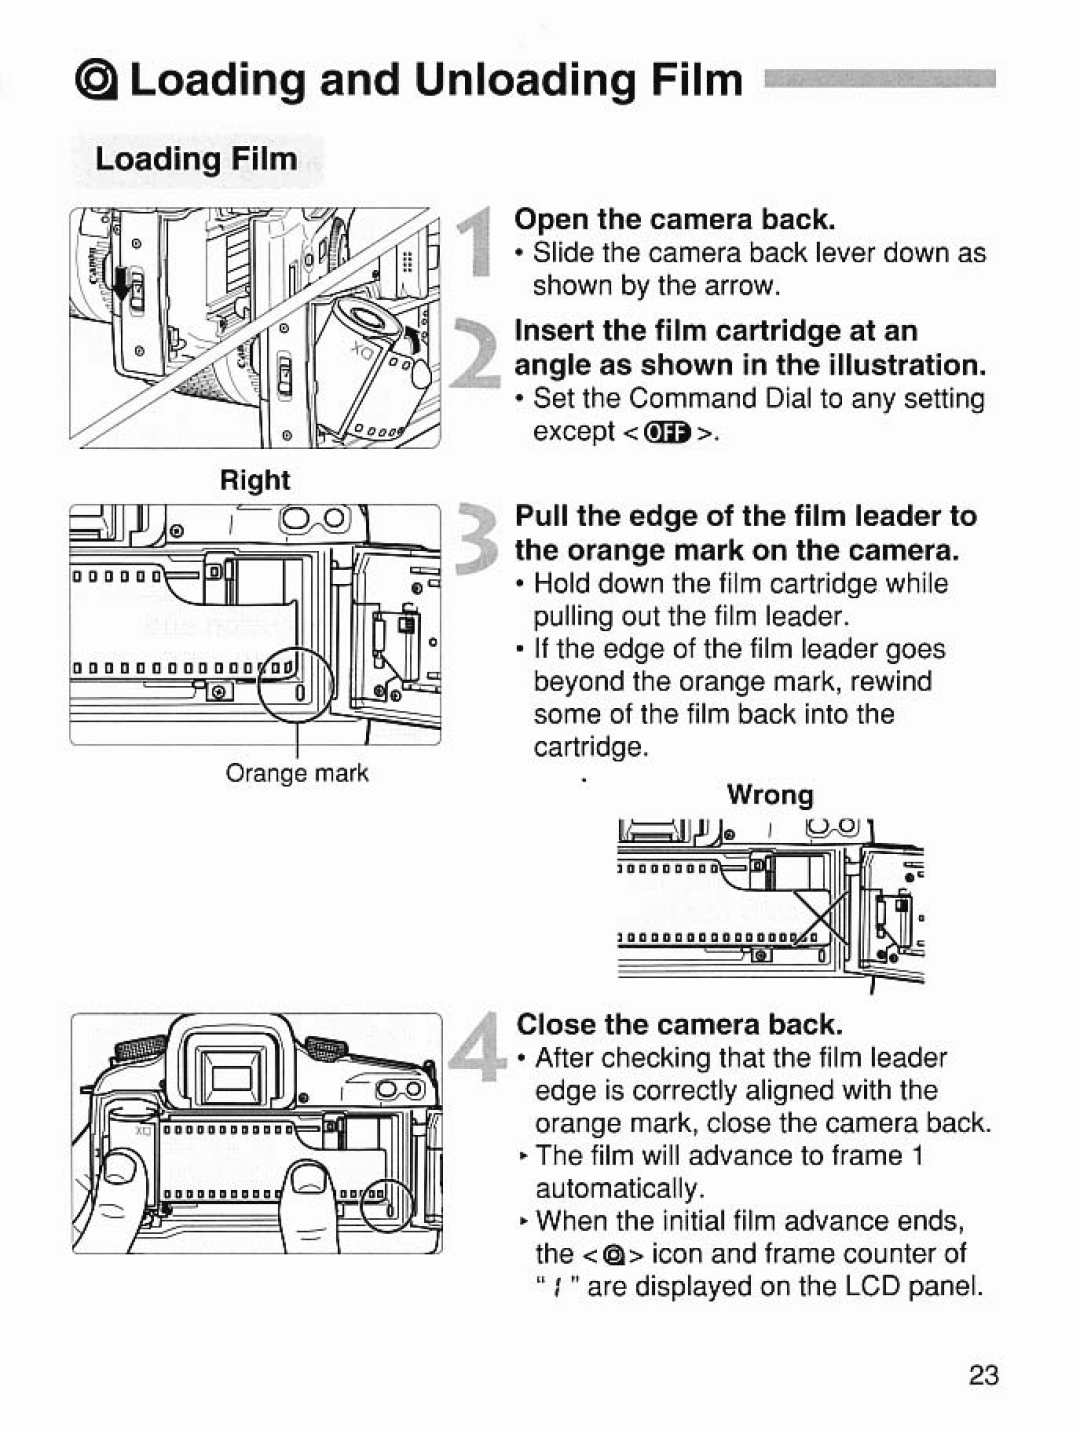 Canon 7 manual 